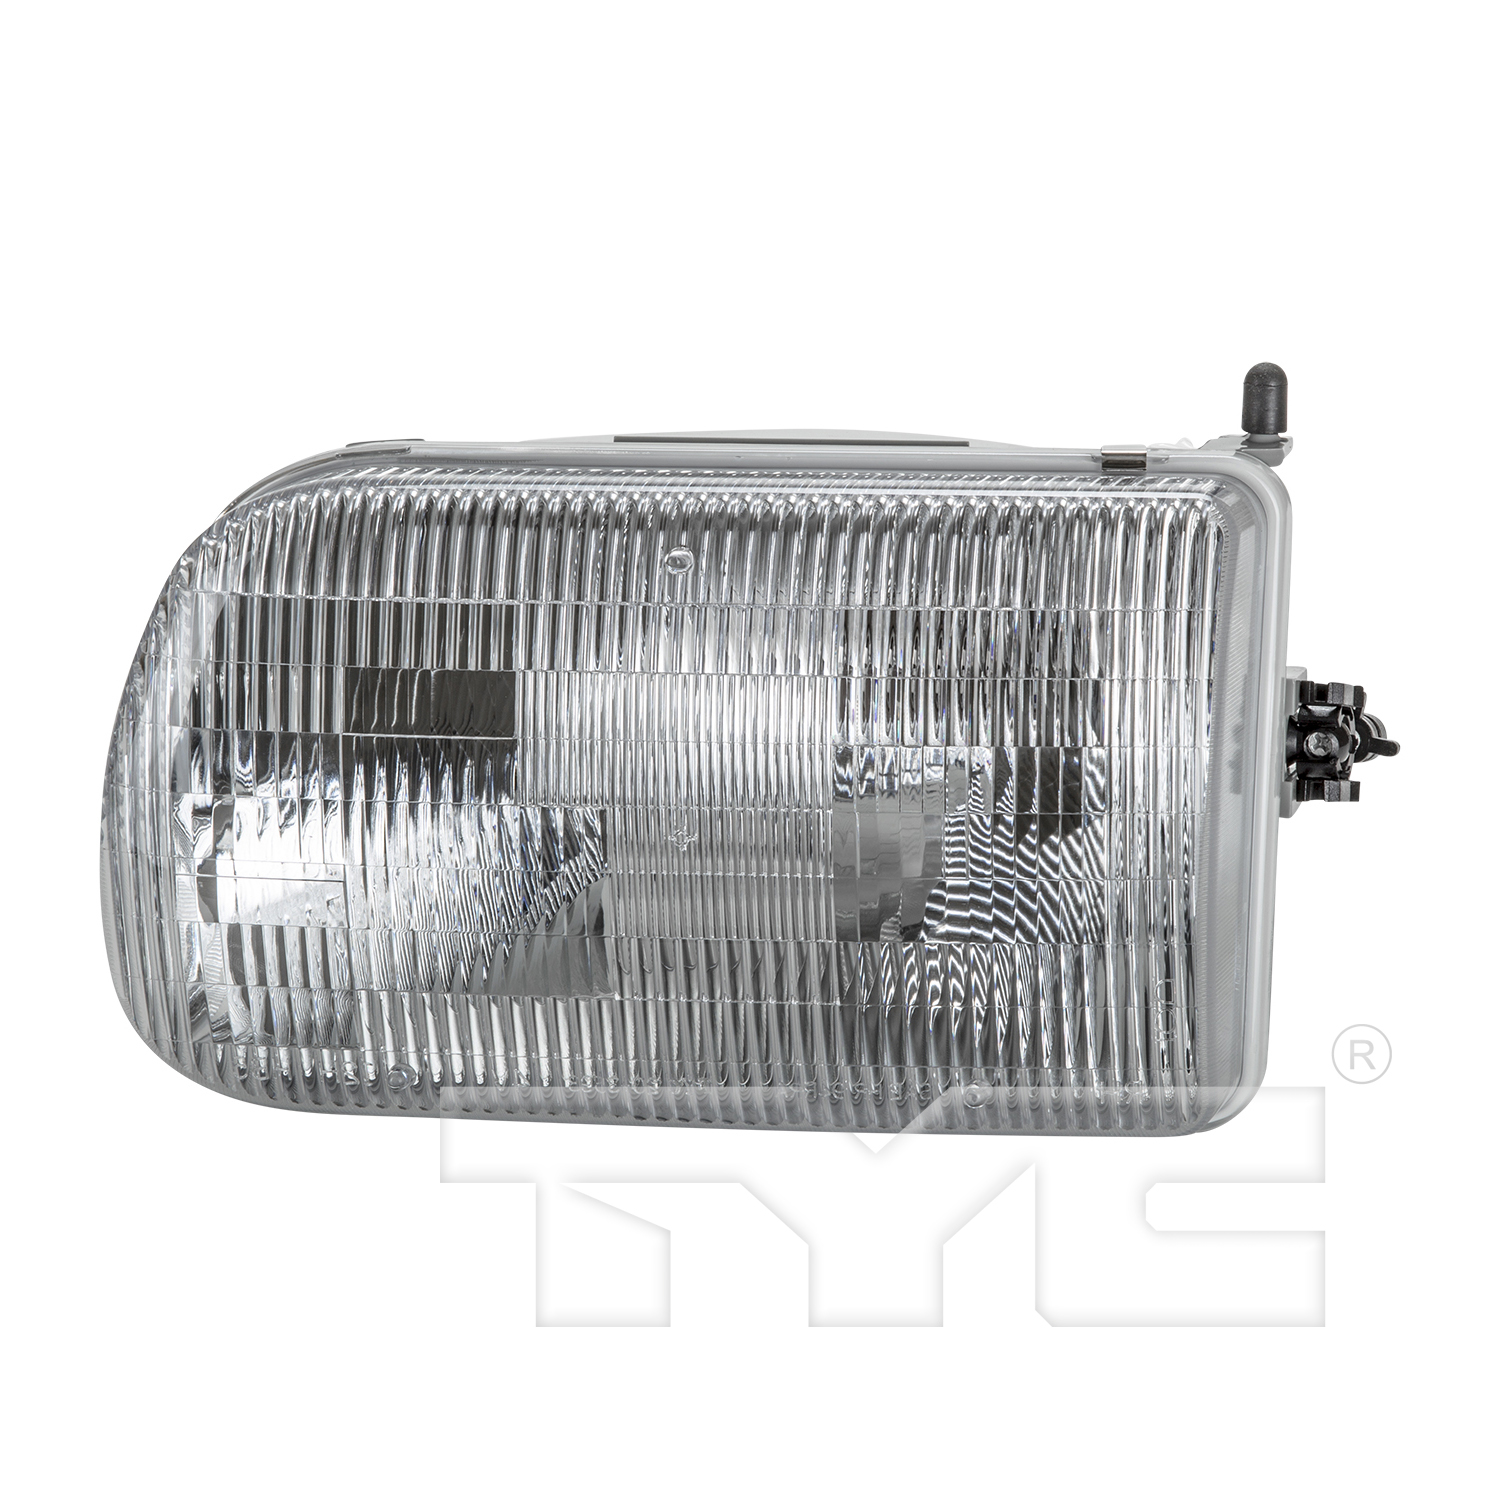 Aftermarket HEADLIGHTS for MAZDA - B2300, B2300,94-97,LT Headlamp assy composite